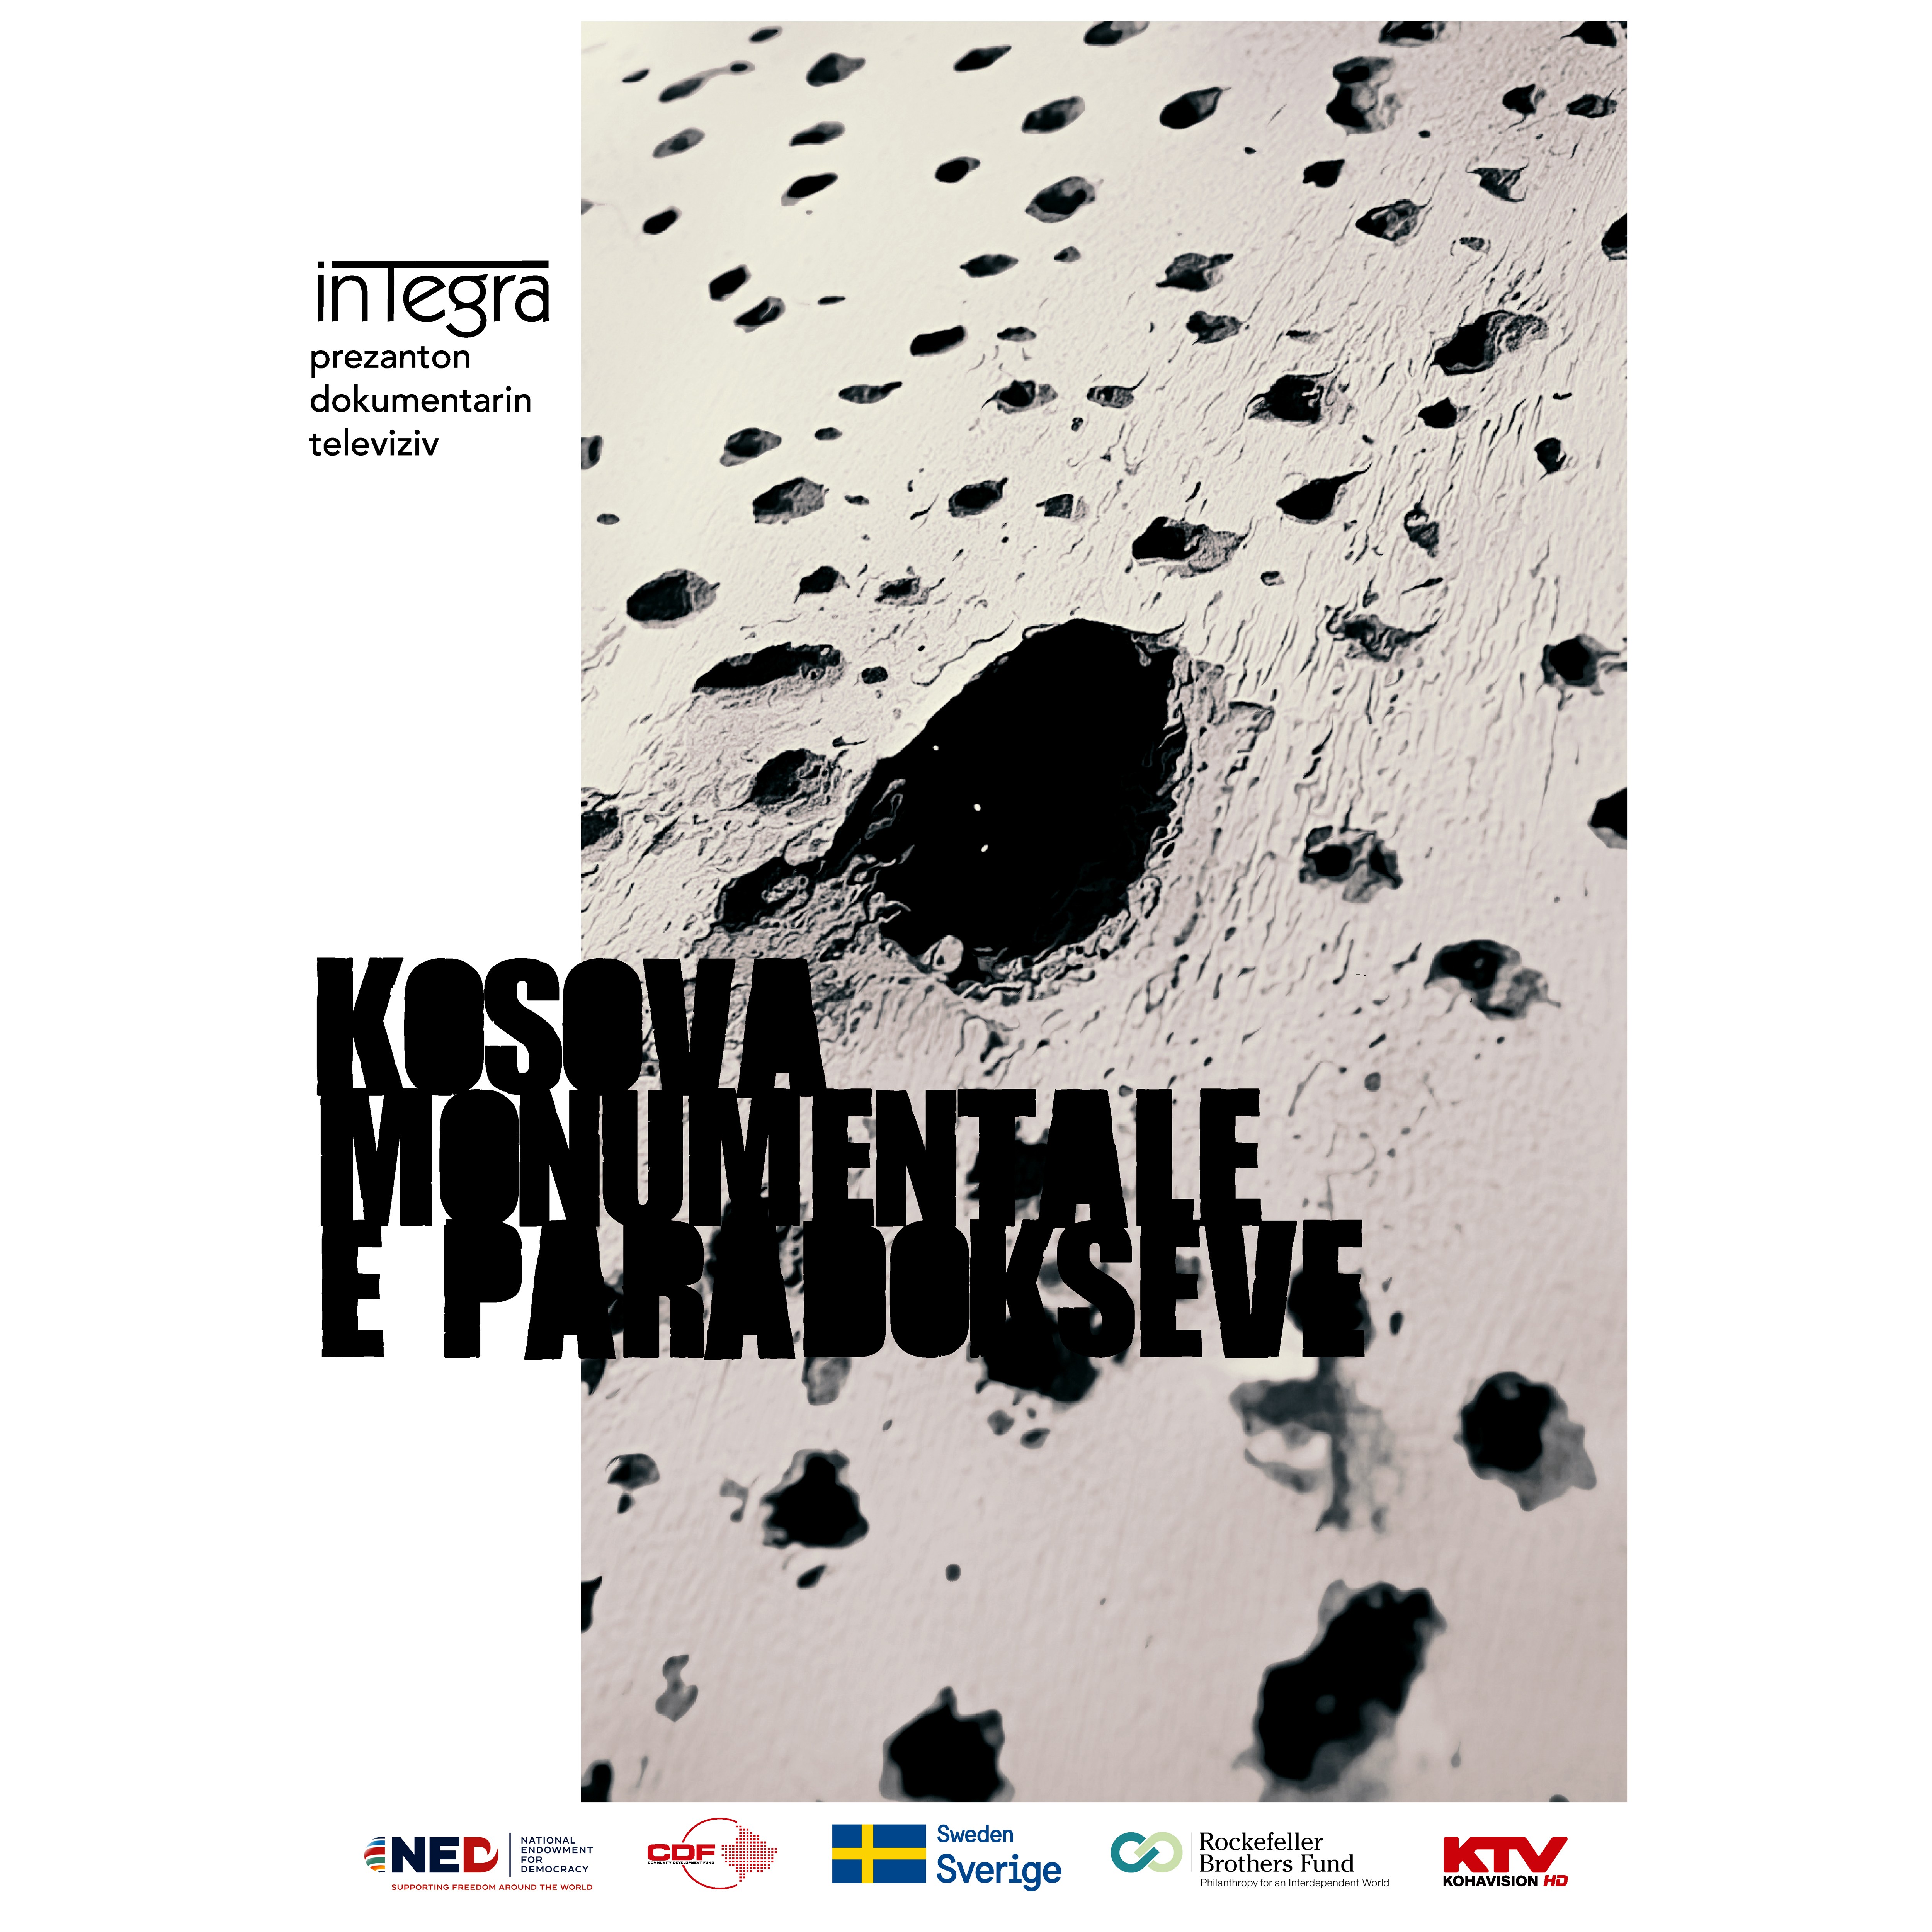 Shfaqet premiera e dokumentarit “Kosova monumentale e paradokseve”